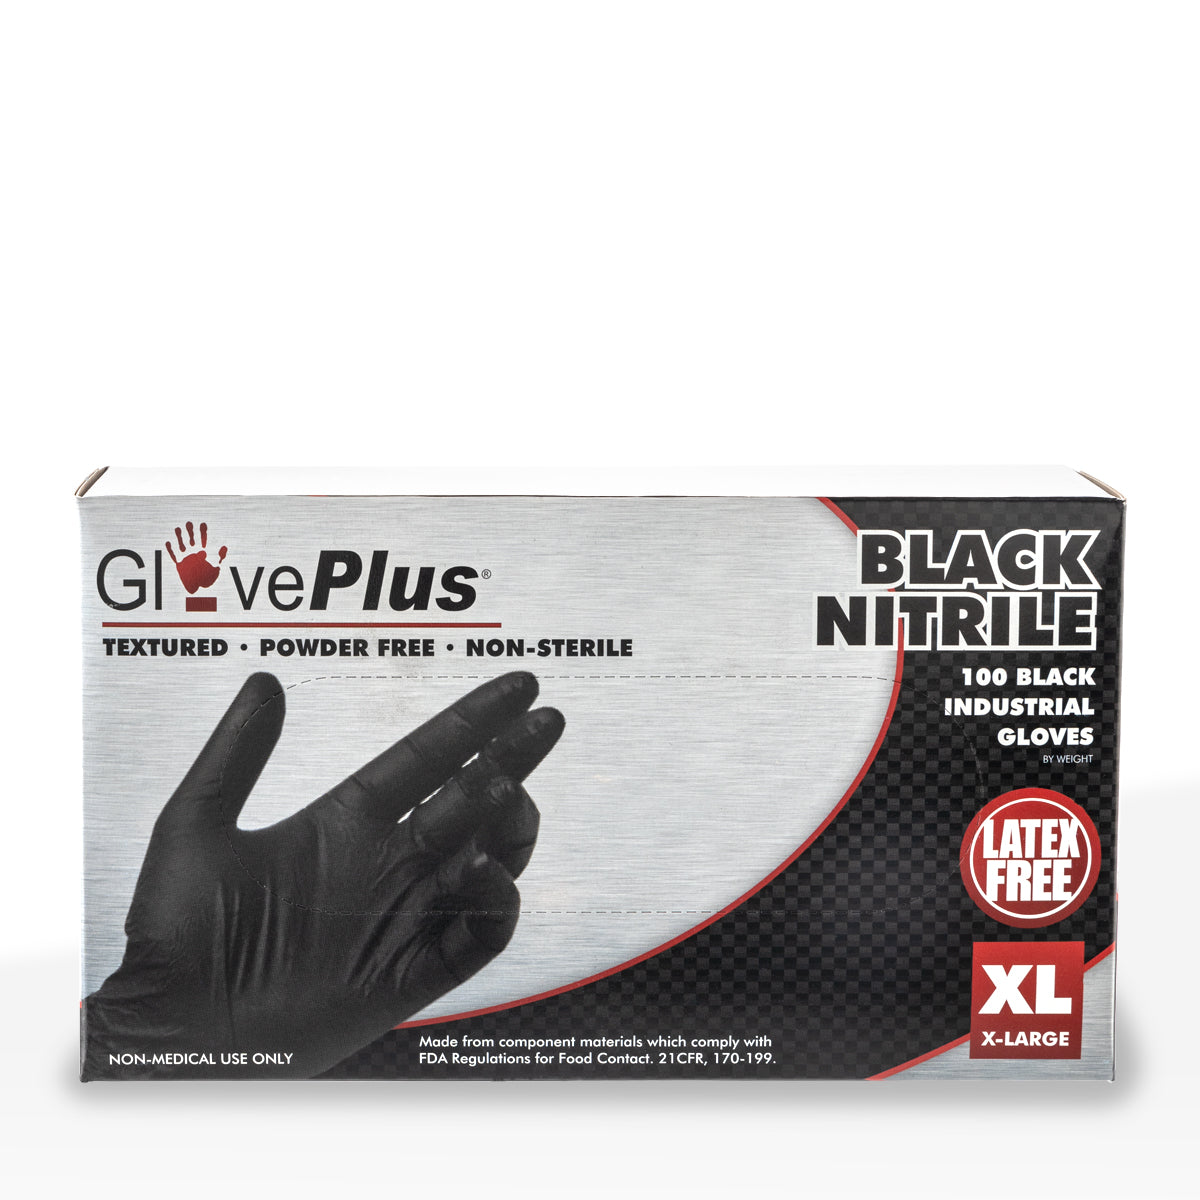 Nitrile Gloves | Powder Free - Black| Extra Large - 100 Count